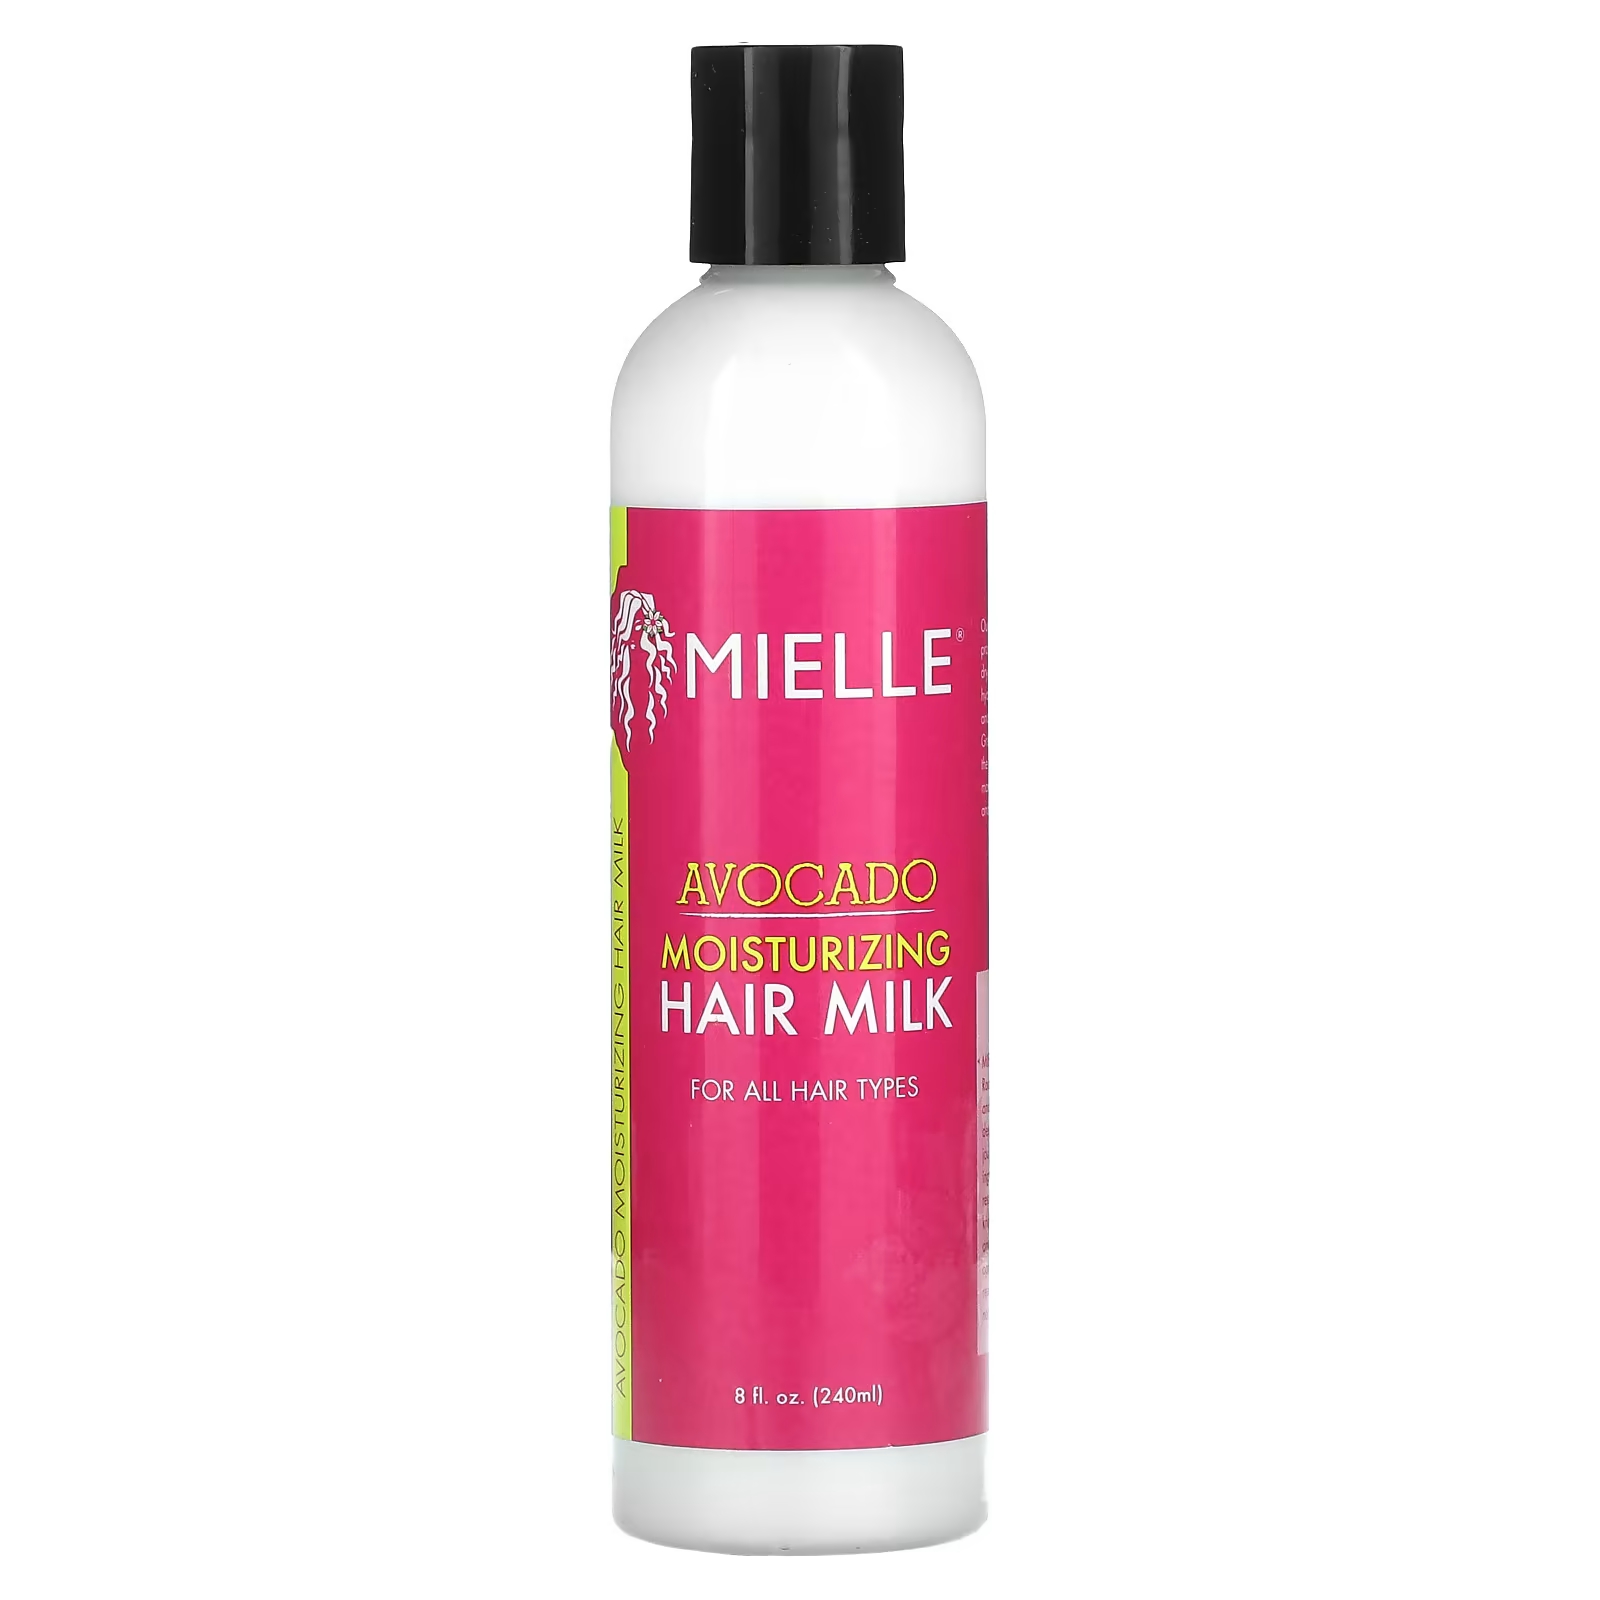 Молочко для волос Mielle увлажняющее с авокадо, 240 мл молочко для волос mielle увлажняющее с авокадо 240 мл